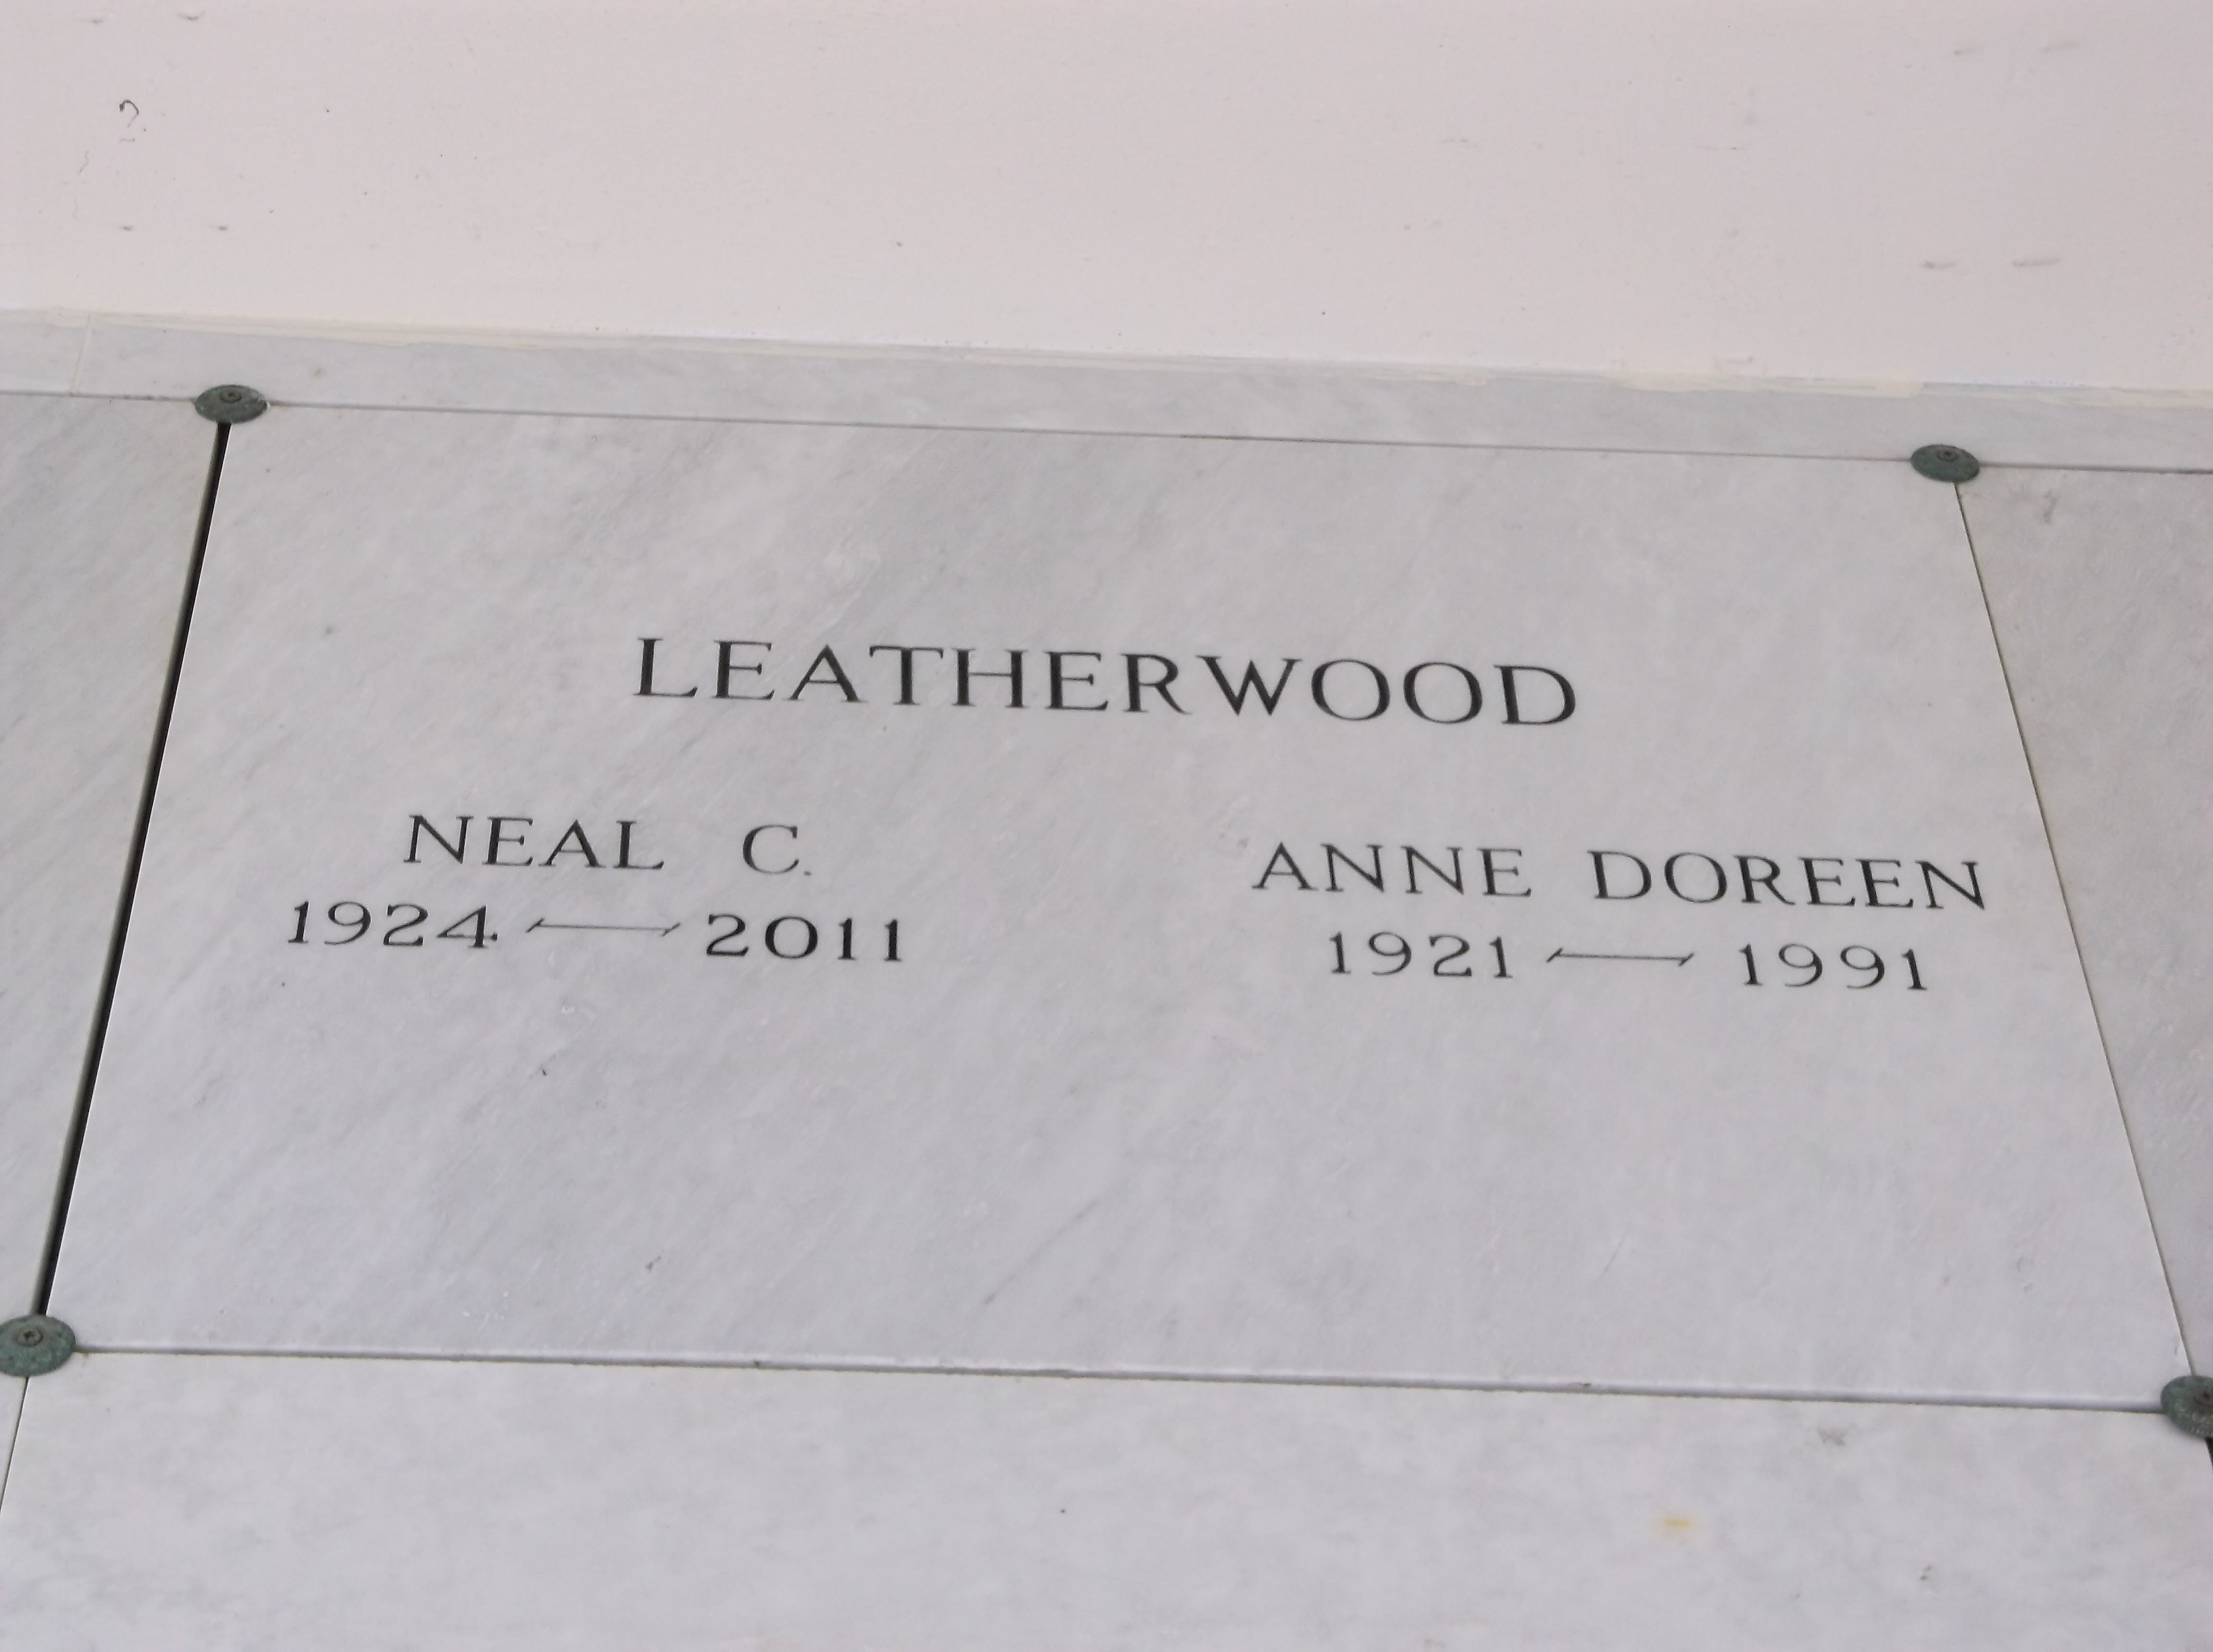 Neal C Leatherwood